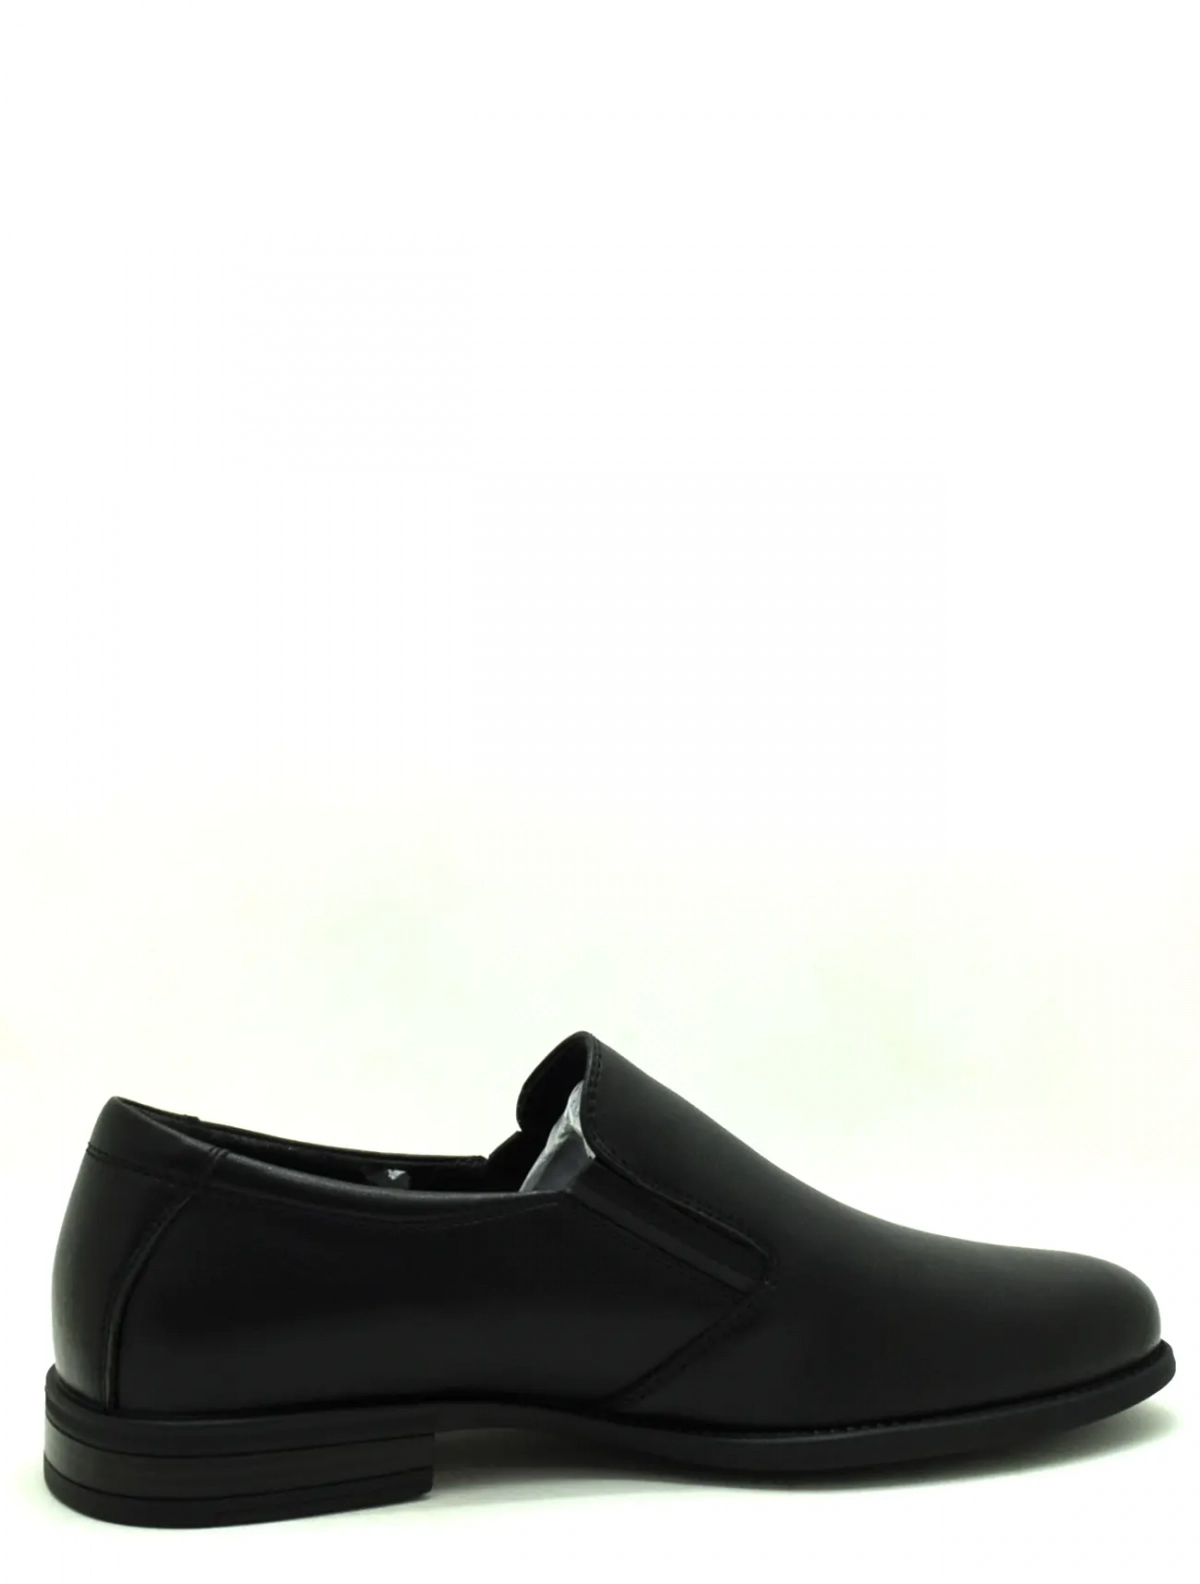 Baden ZA130-040 мужские туфли